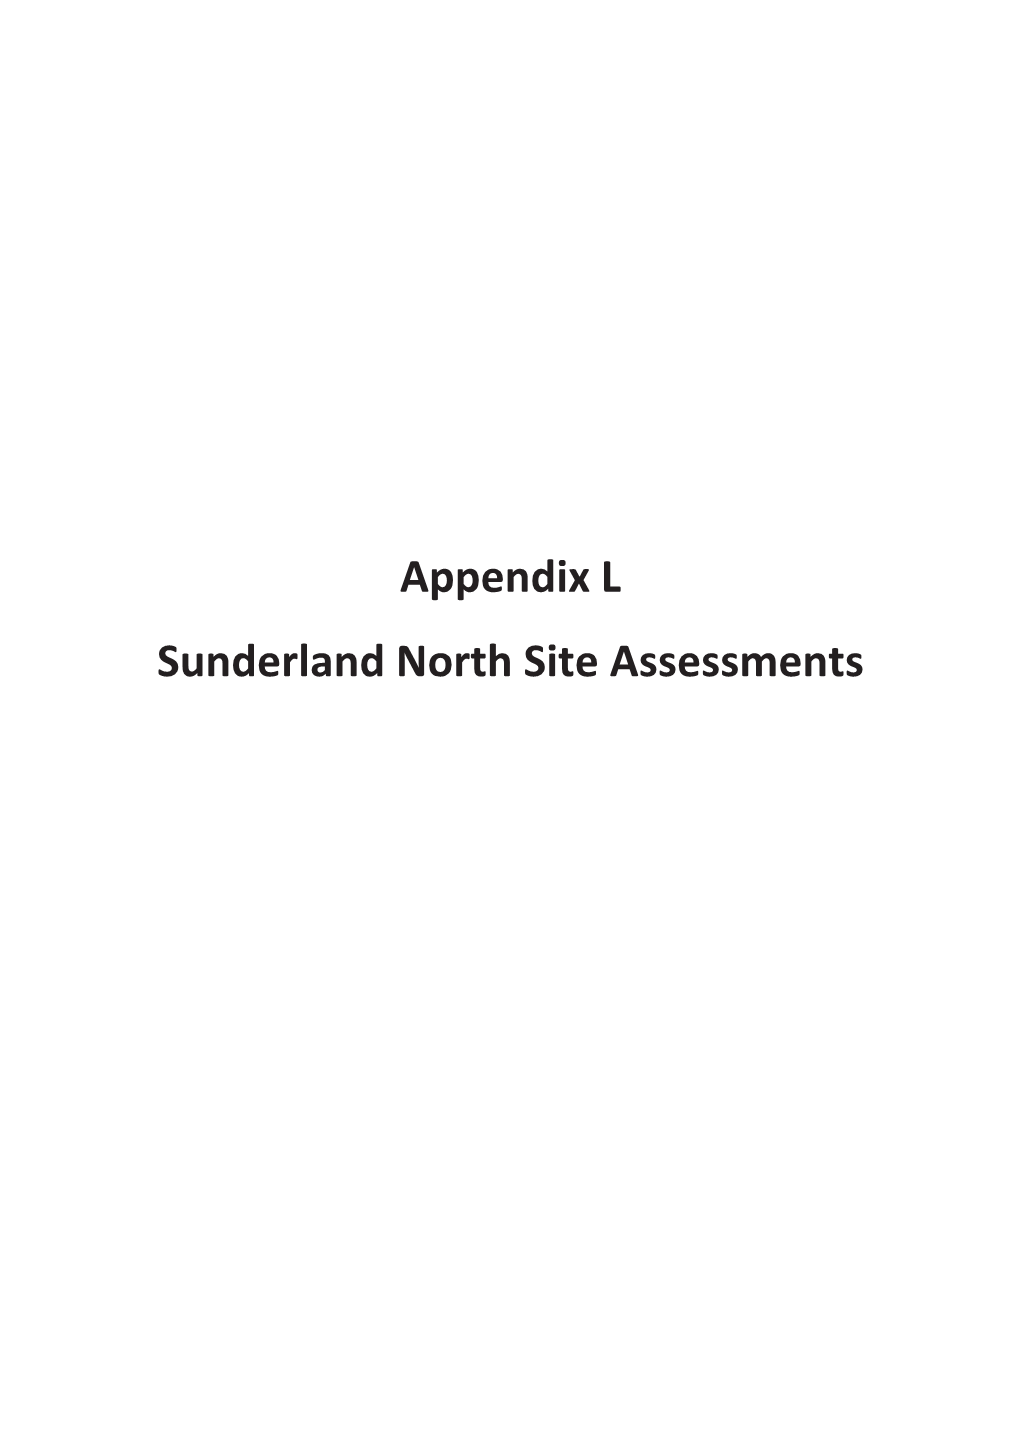 Sunderland North